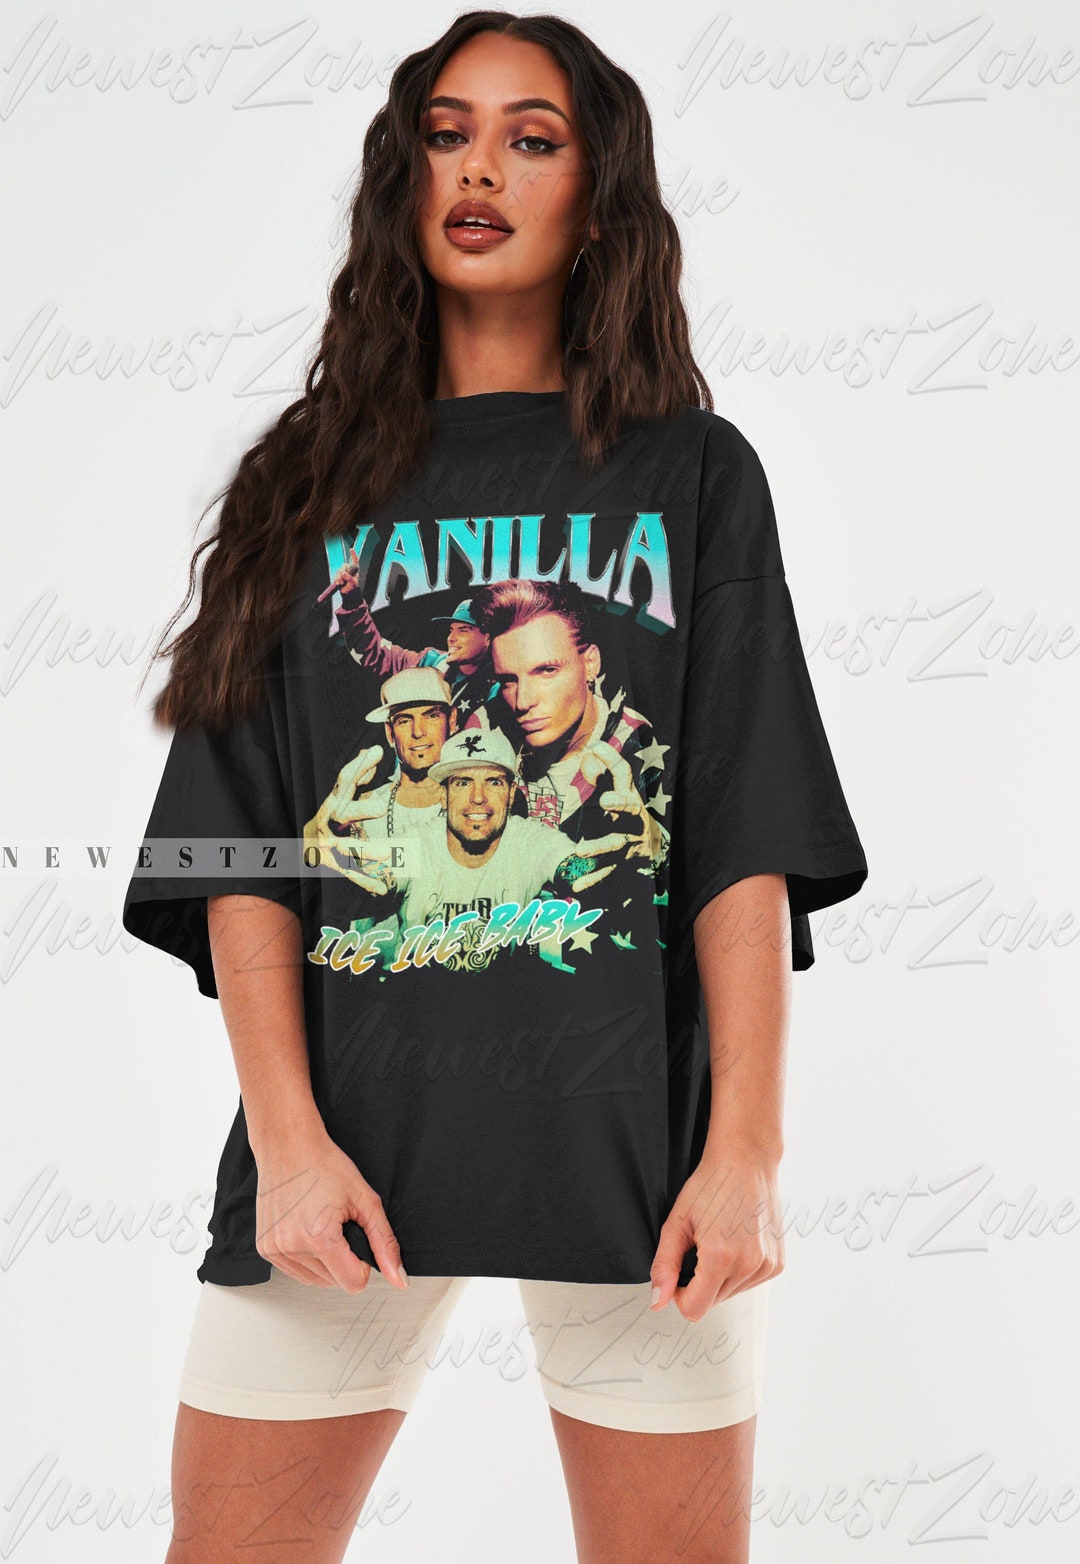 Vanilla Ice Baby Vintage Tshirt Ninja Rap American Rapper - Etsy